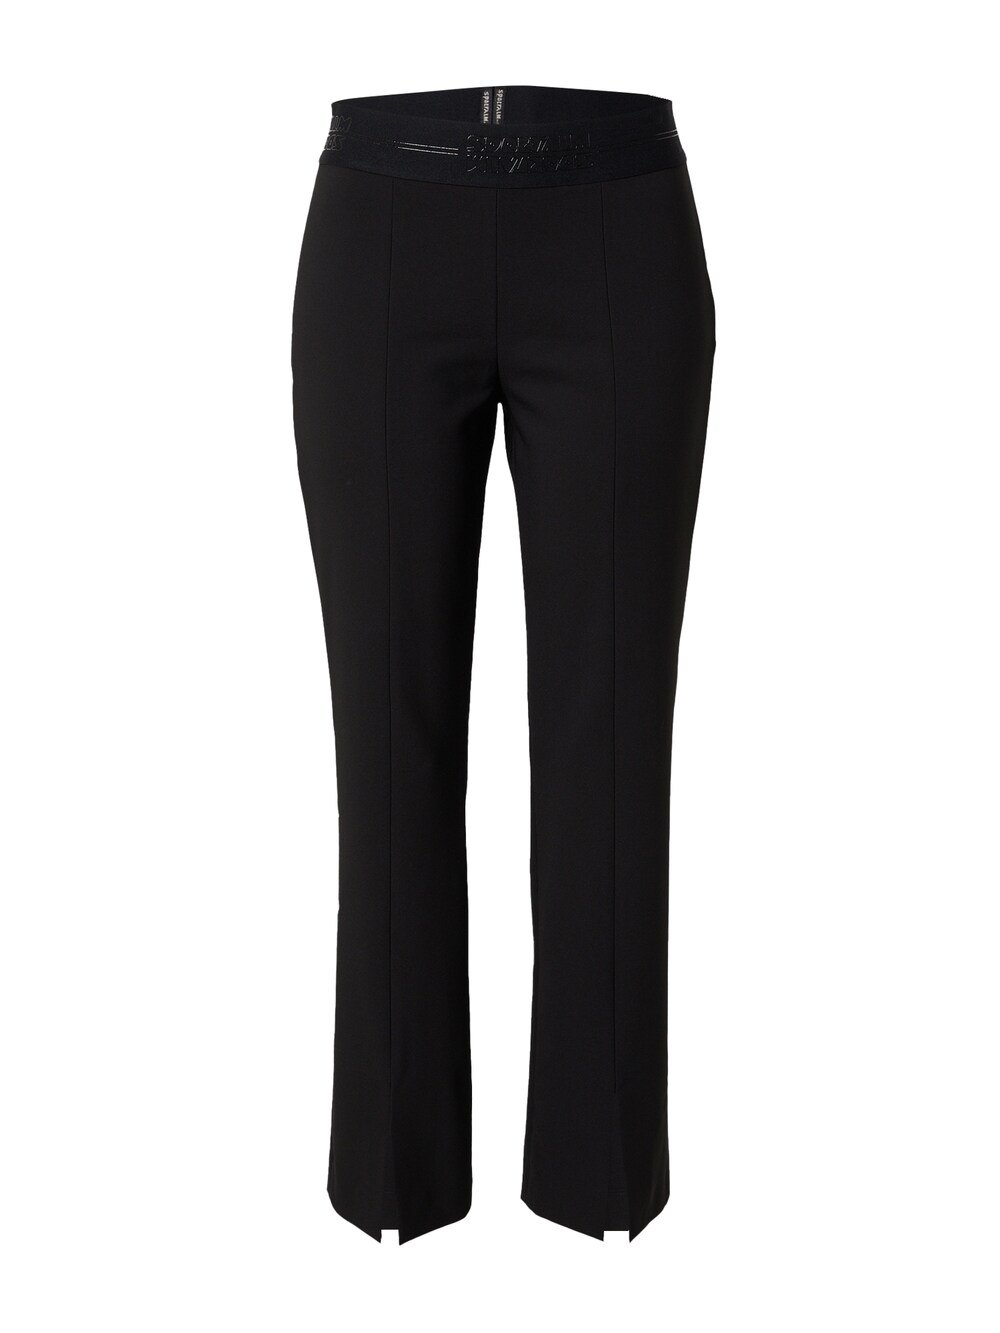 Пижамные штаны Sportalm Kitzbühel Sparky, черный толстовка sportalm размер 36 черный